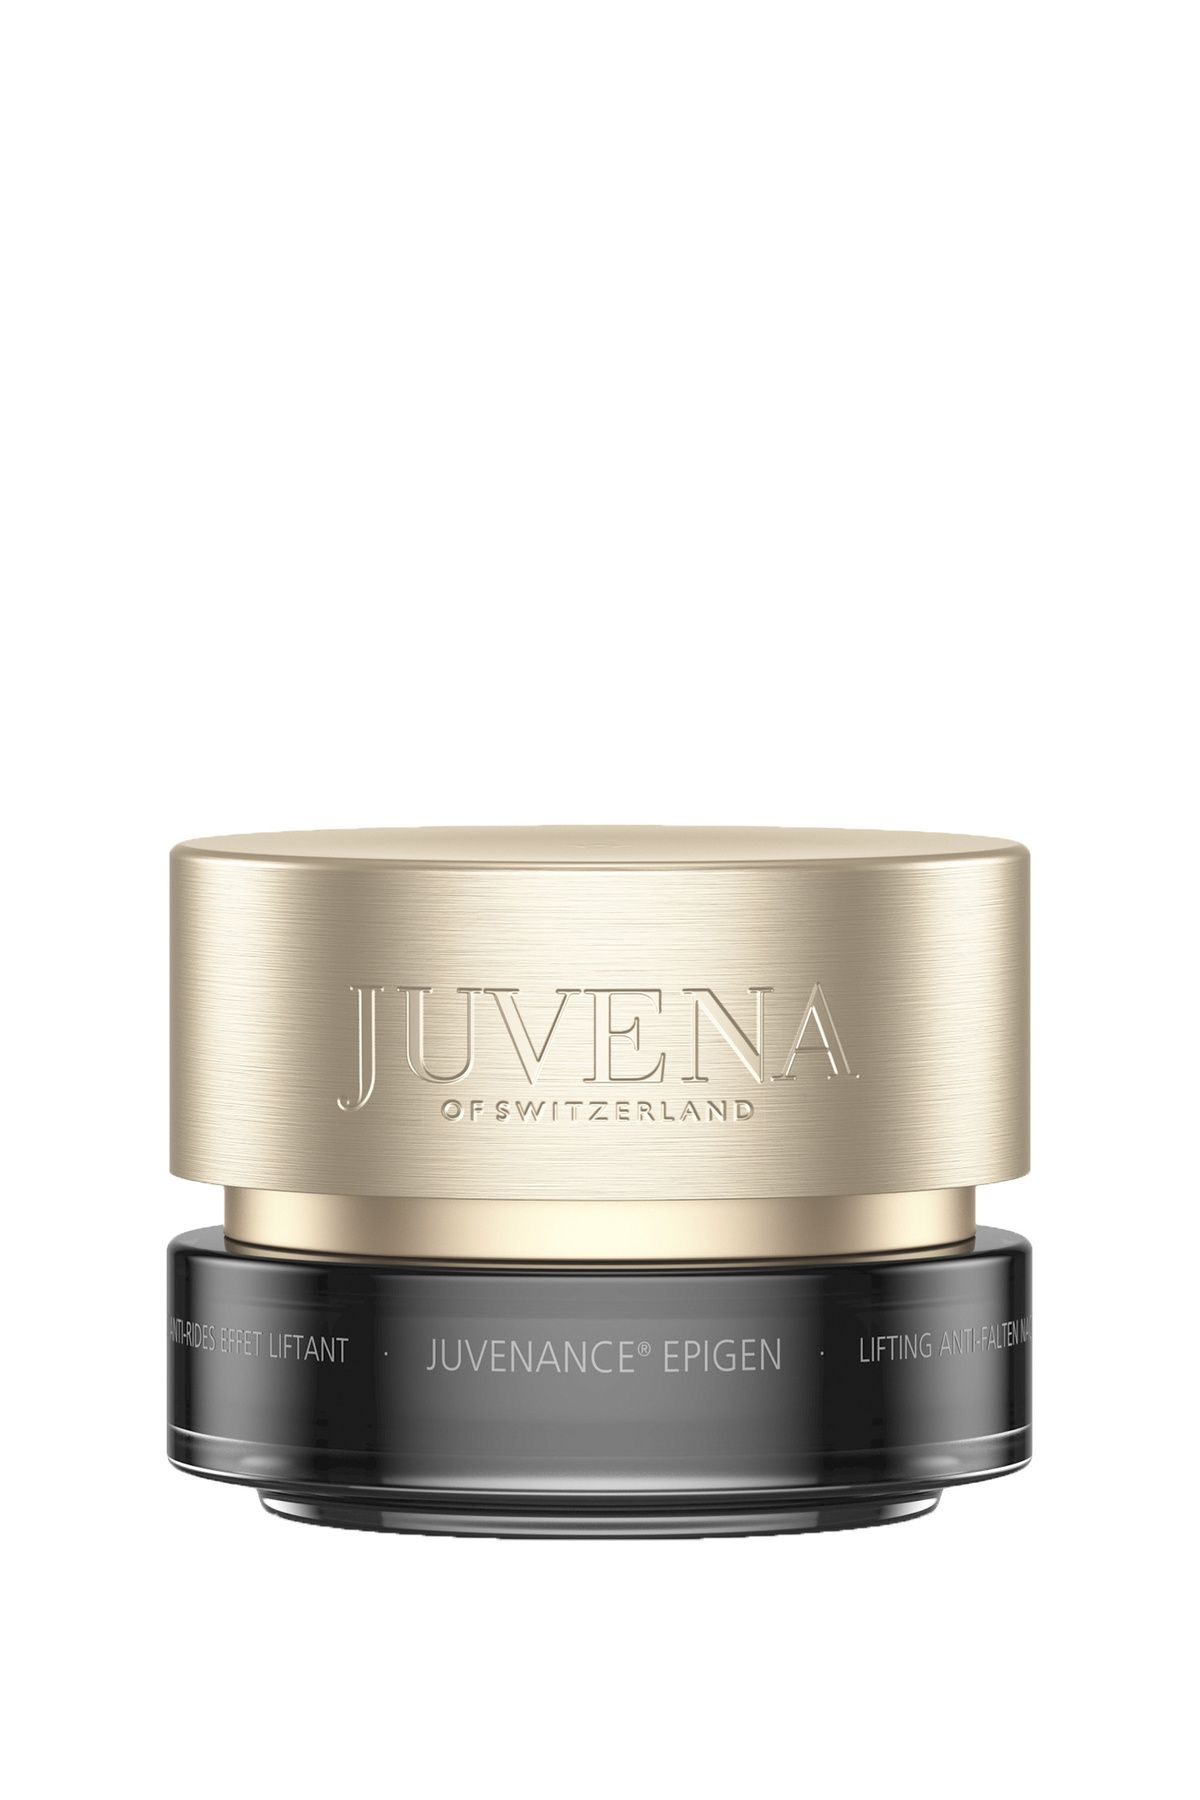 Juvena Juvenance Epigen Lift AntiWrinkle Night Cream 50ml